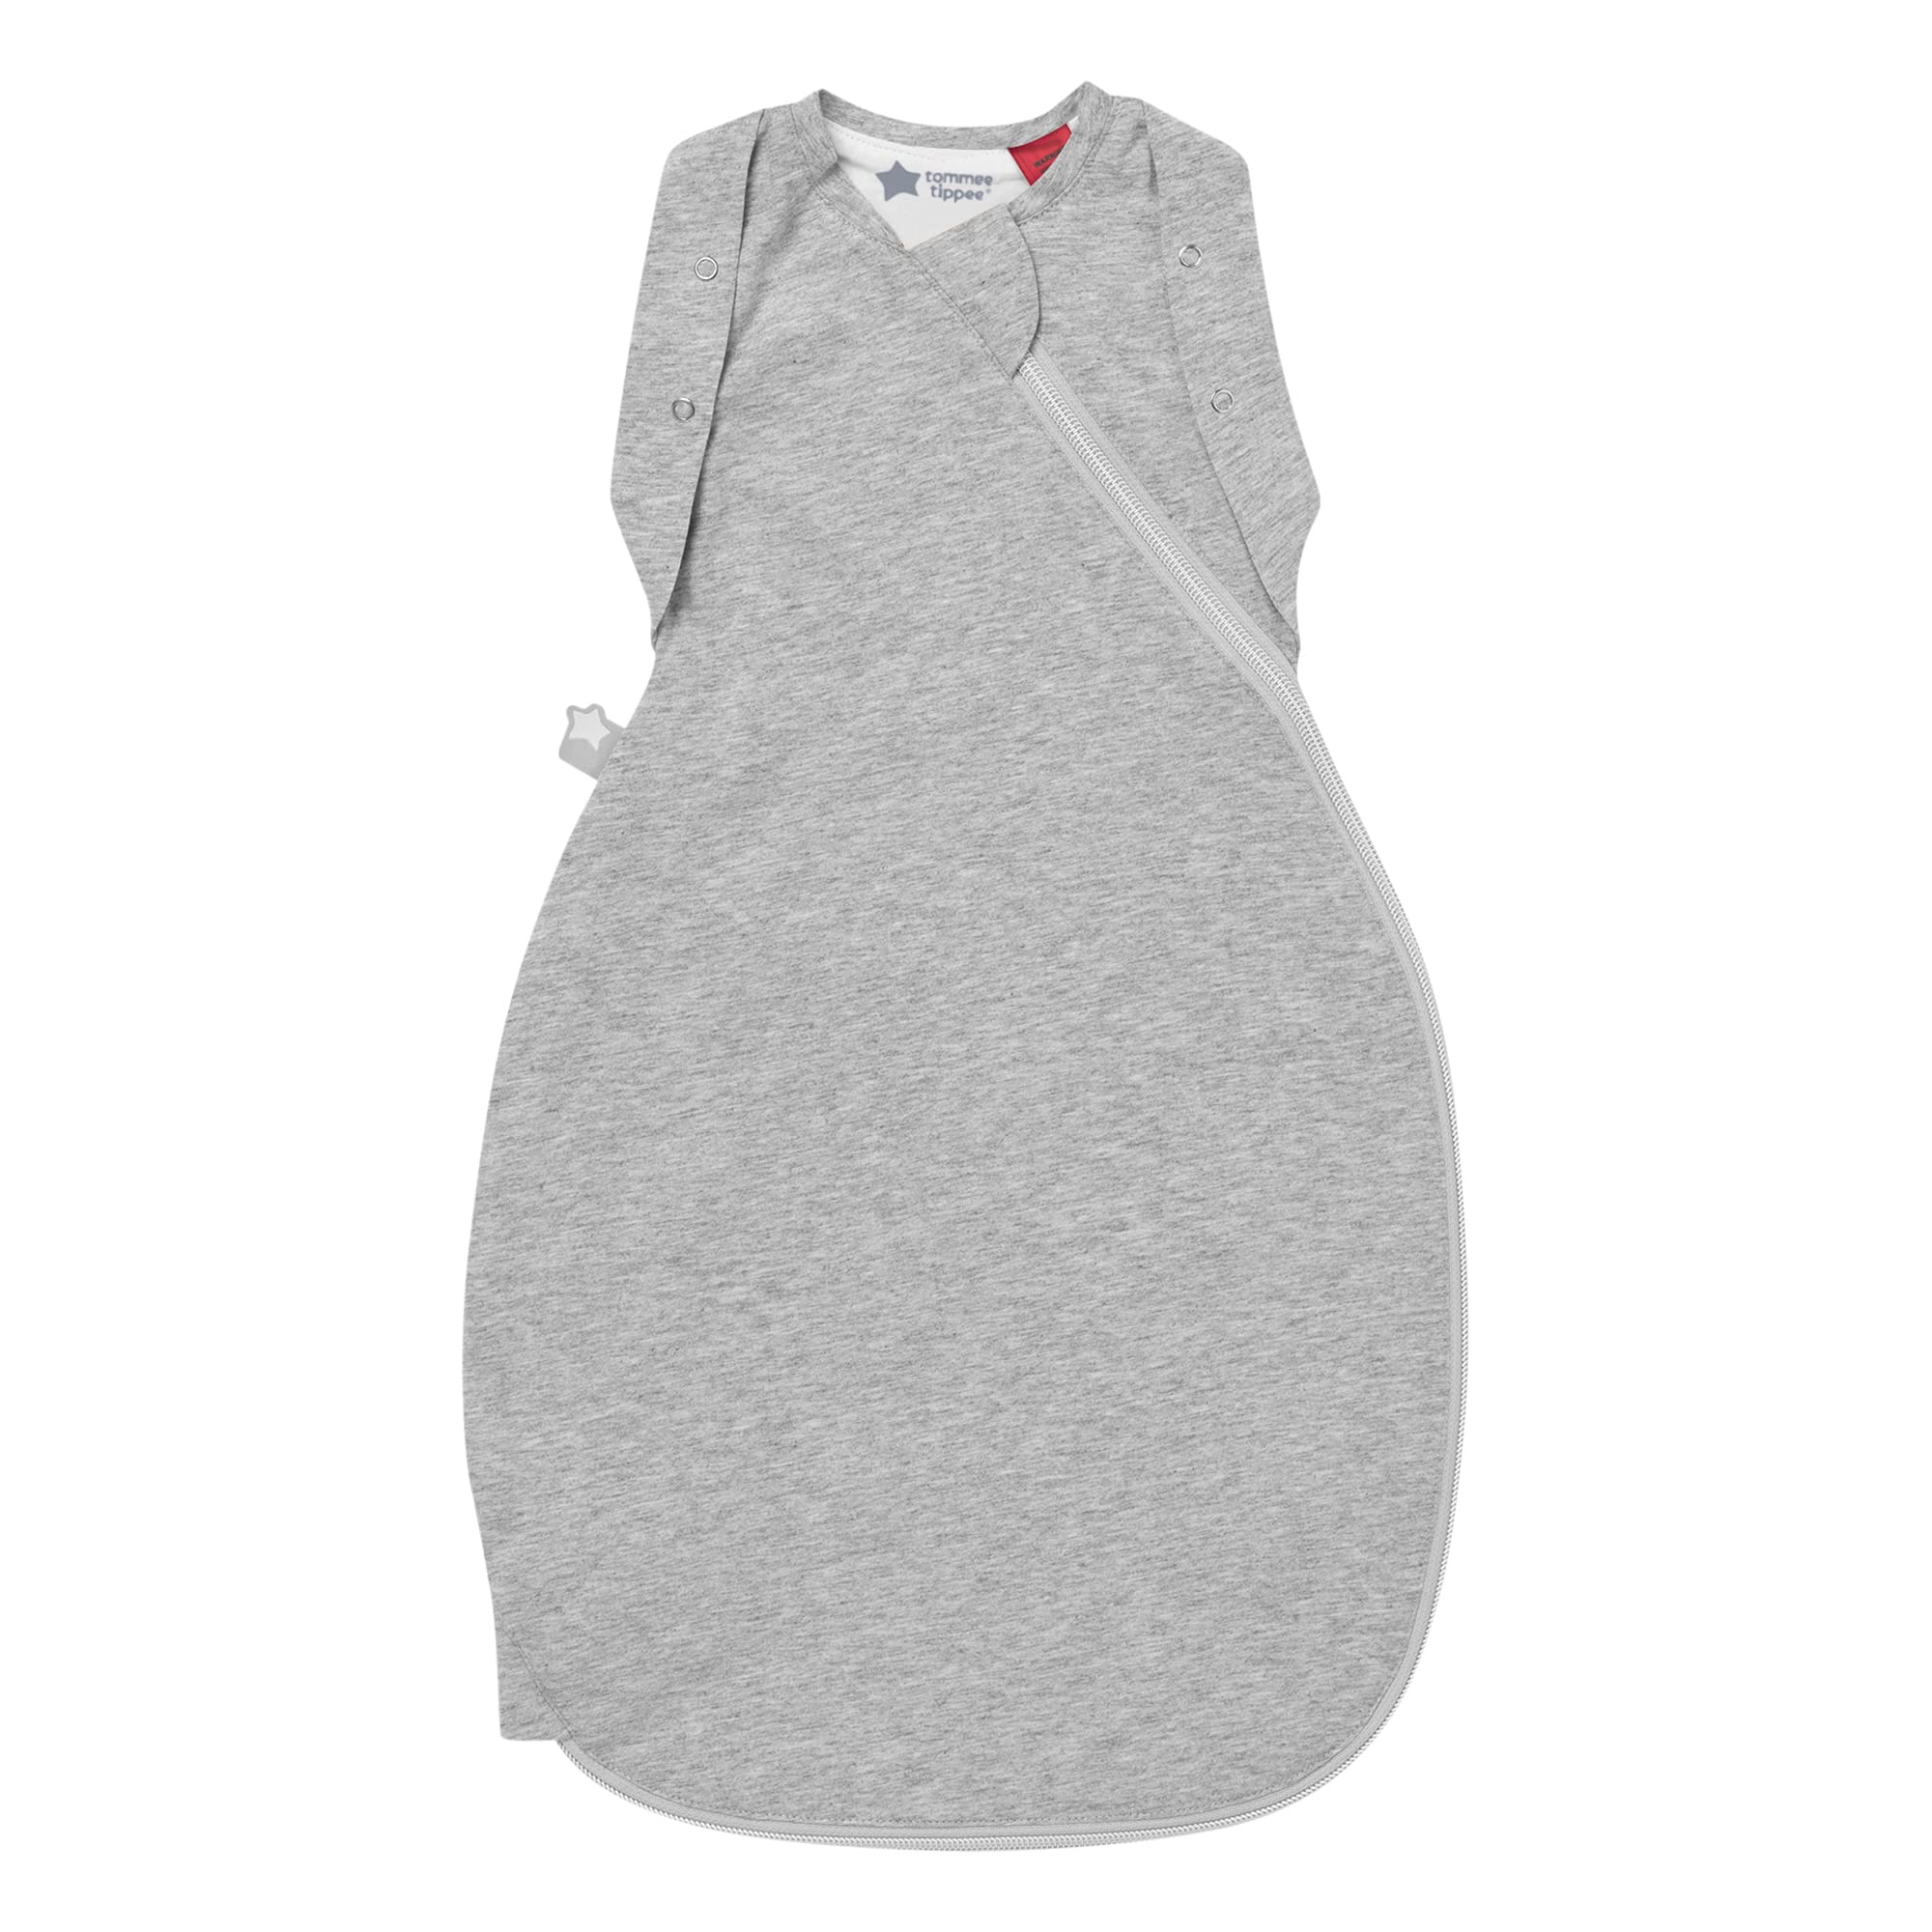 Tommee Tippee Baby Sleep Bag for Newborns, 0-3m, 1.0 TOG, The Original Grobag Swaddle Bag, Hip-Healthy Design, Soft Cotton-Rich Fabric, Sky Grey Marl